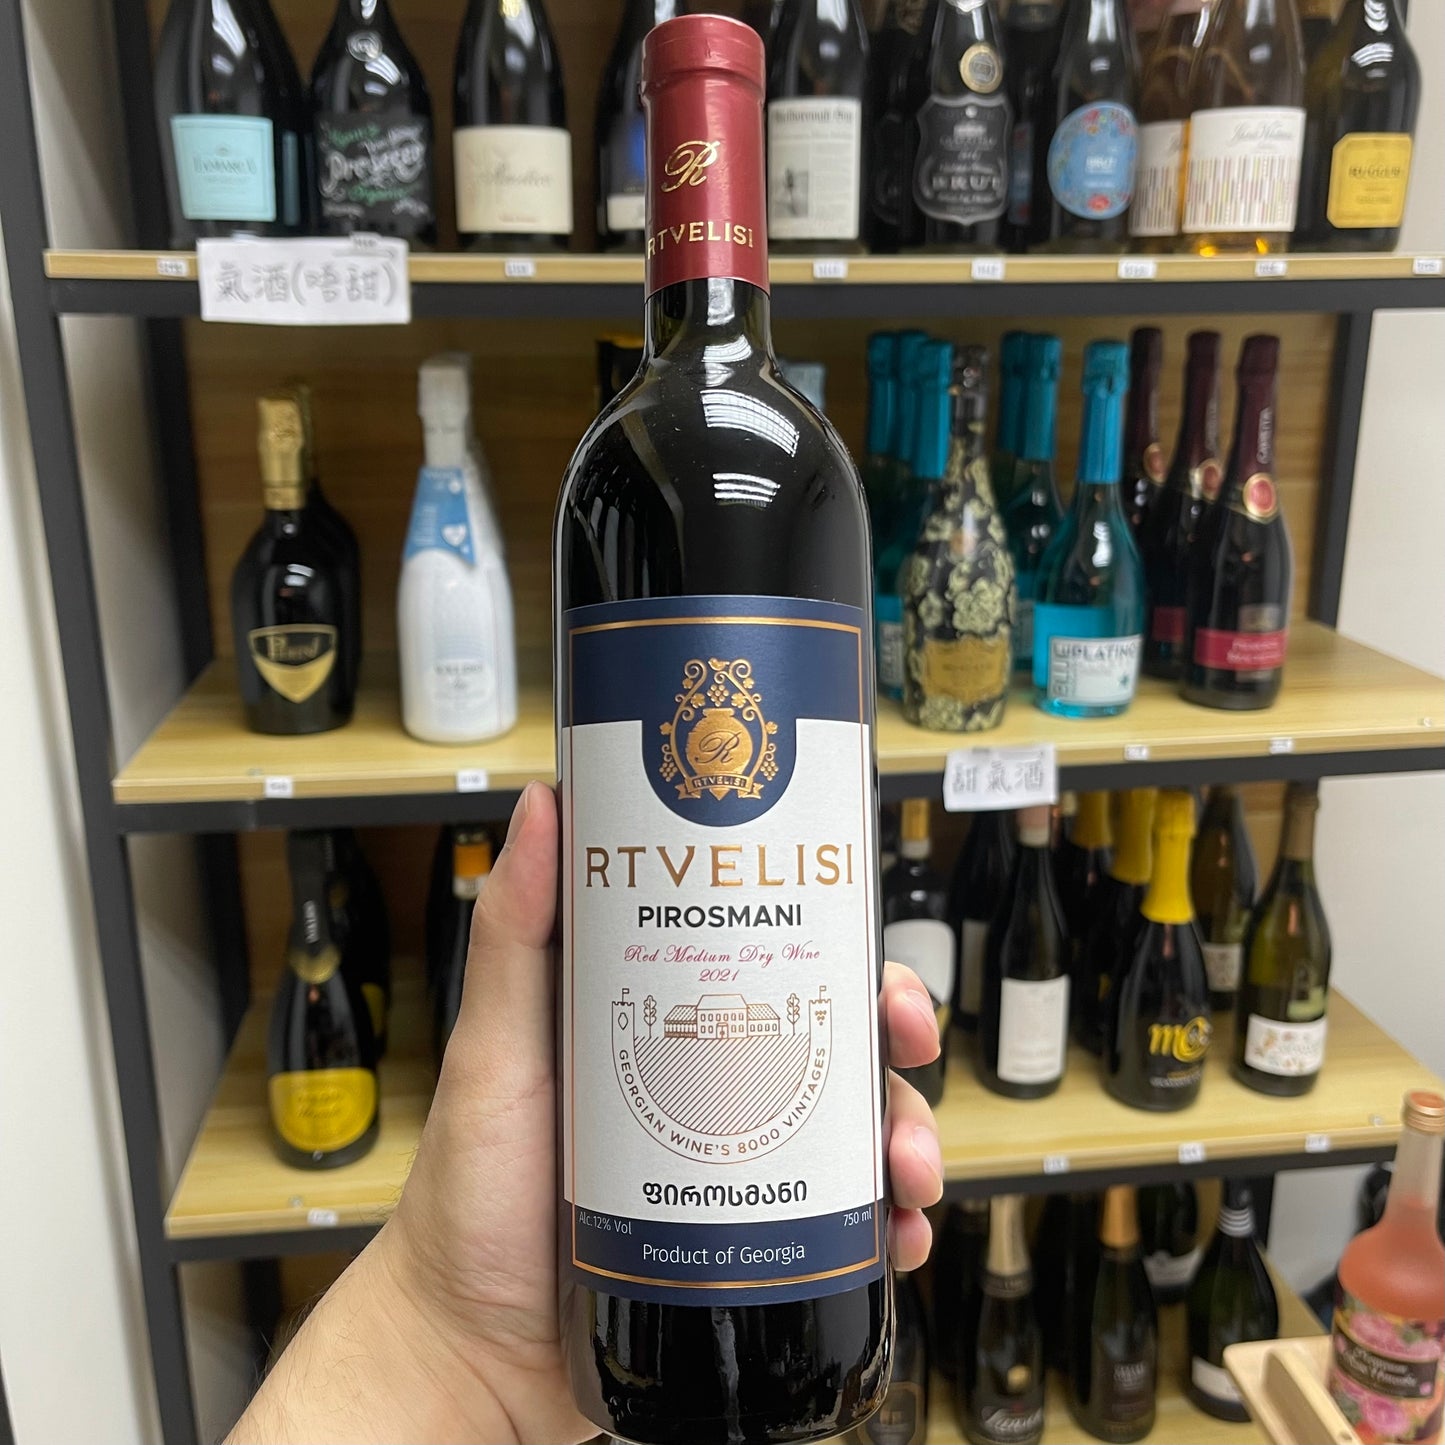 格魯吉亞 Rtvelisi Pirosmani Saperavi Medium-dry Red 2021 微甜紅酒